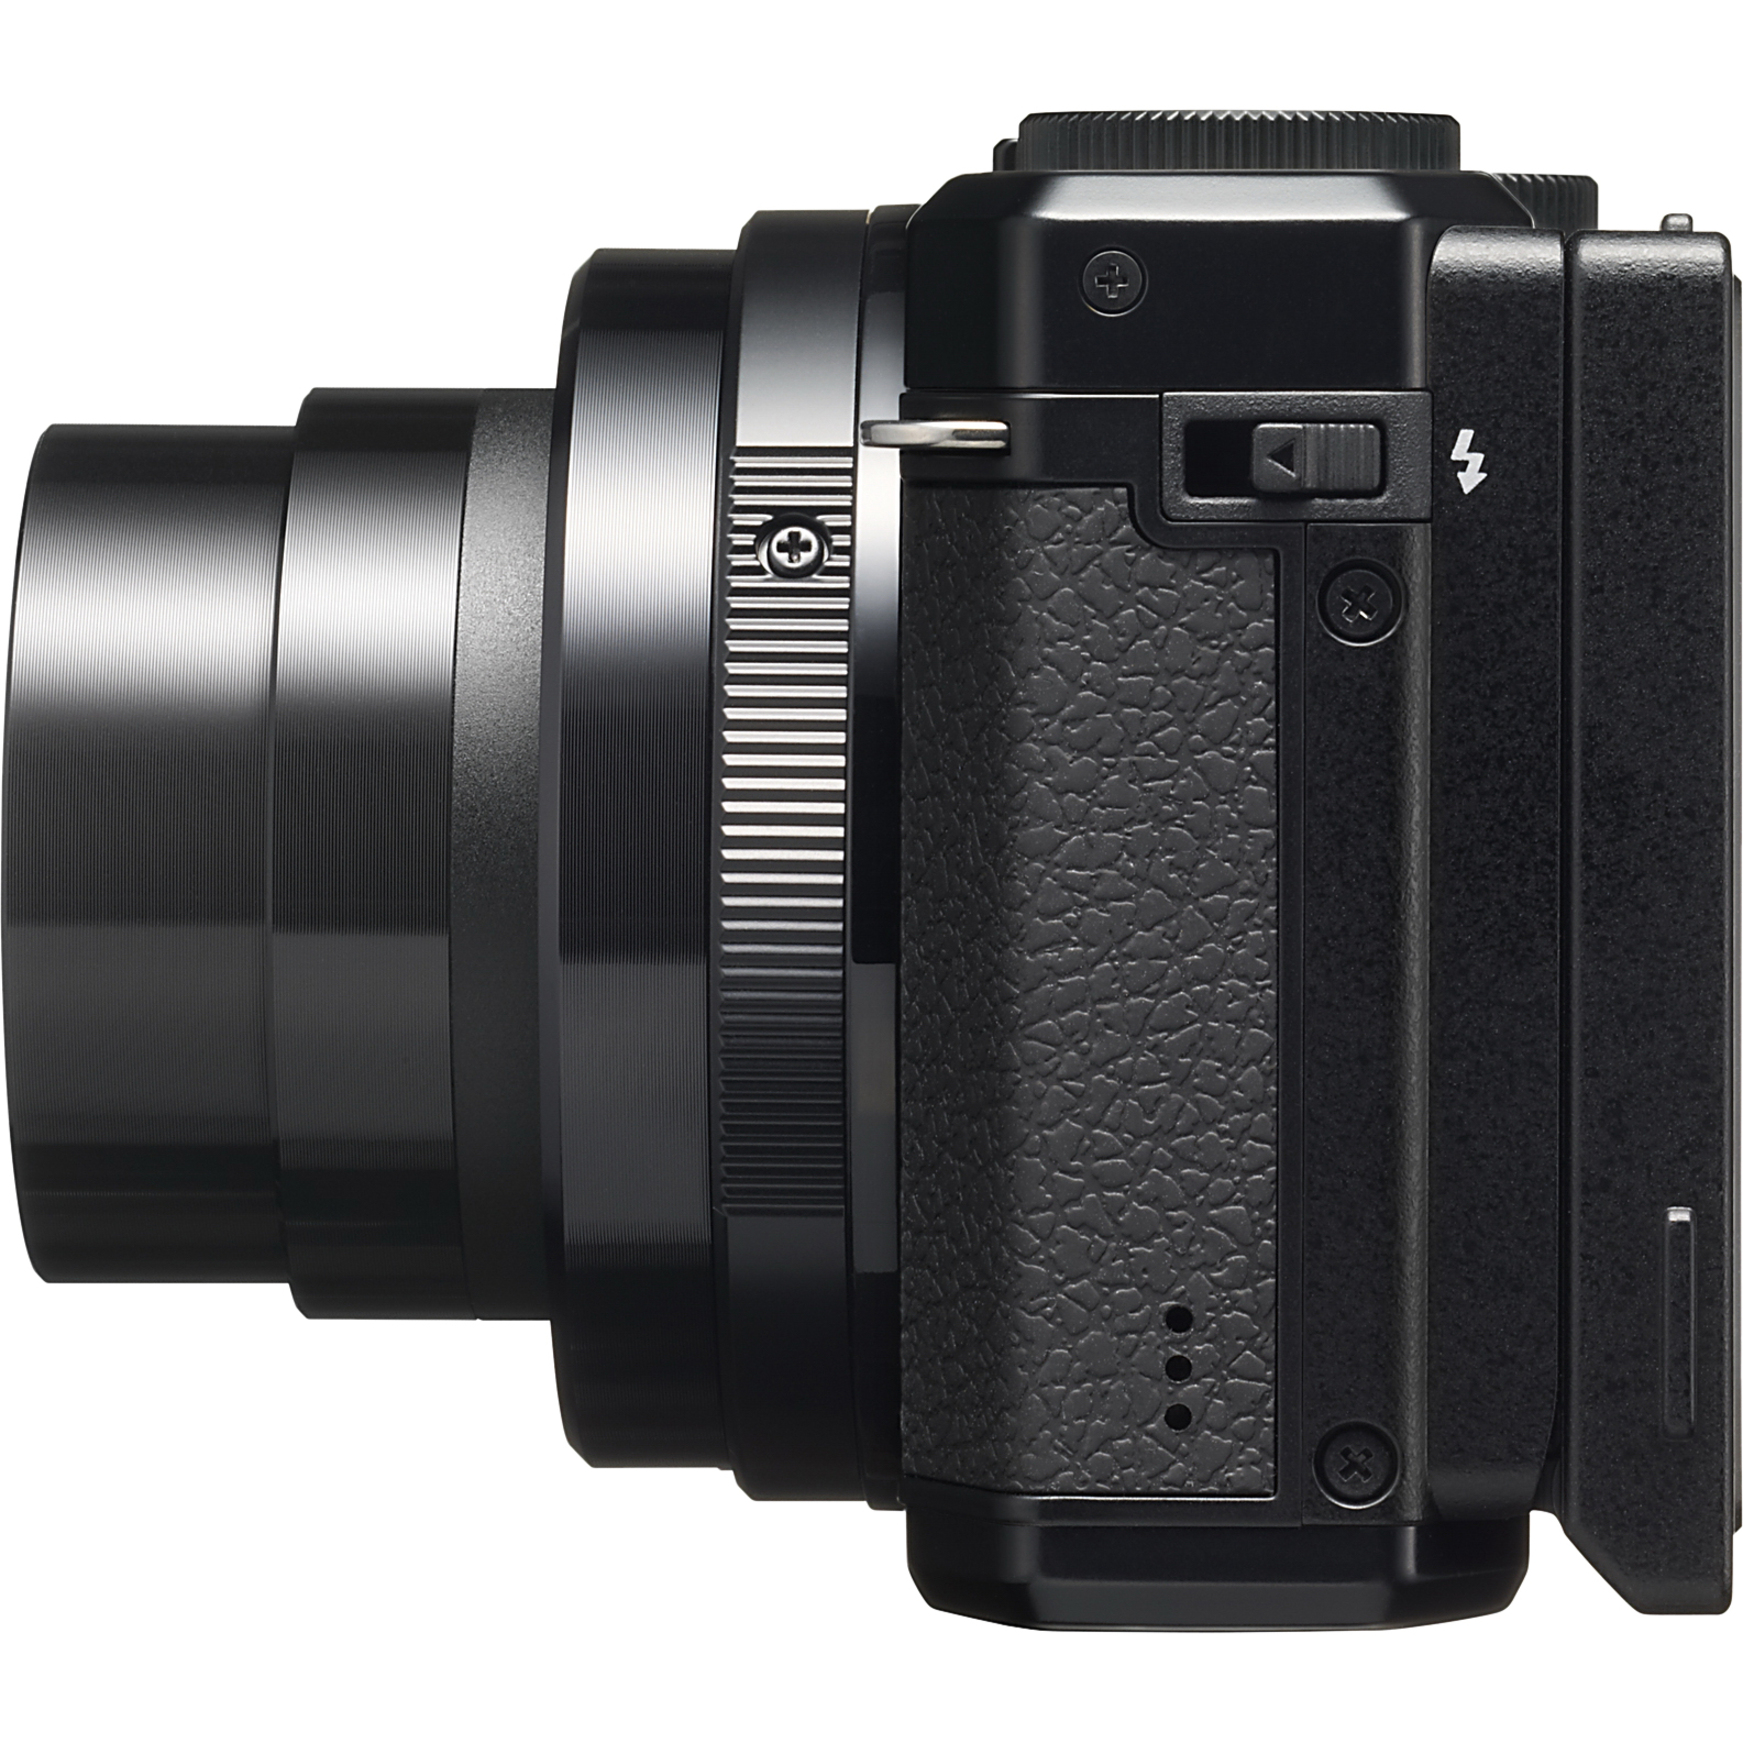 Pentax MX-1 12 Megapixel Compact Camera, Black - image 5 of 6